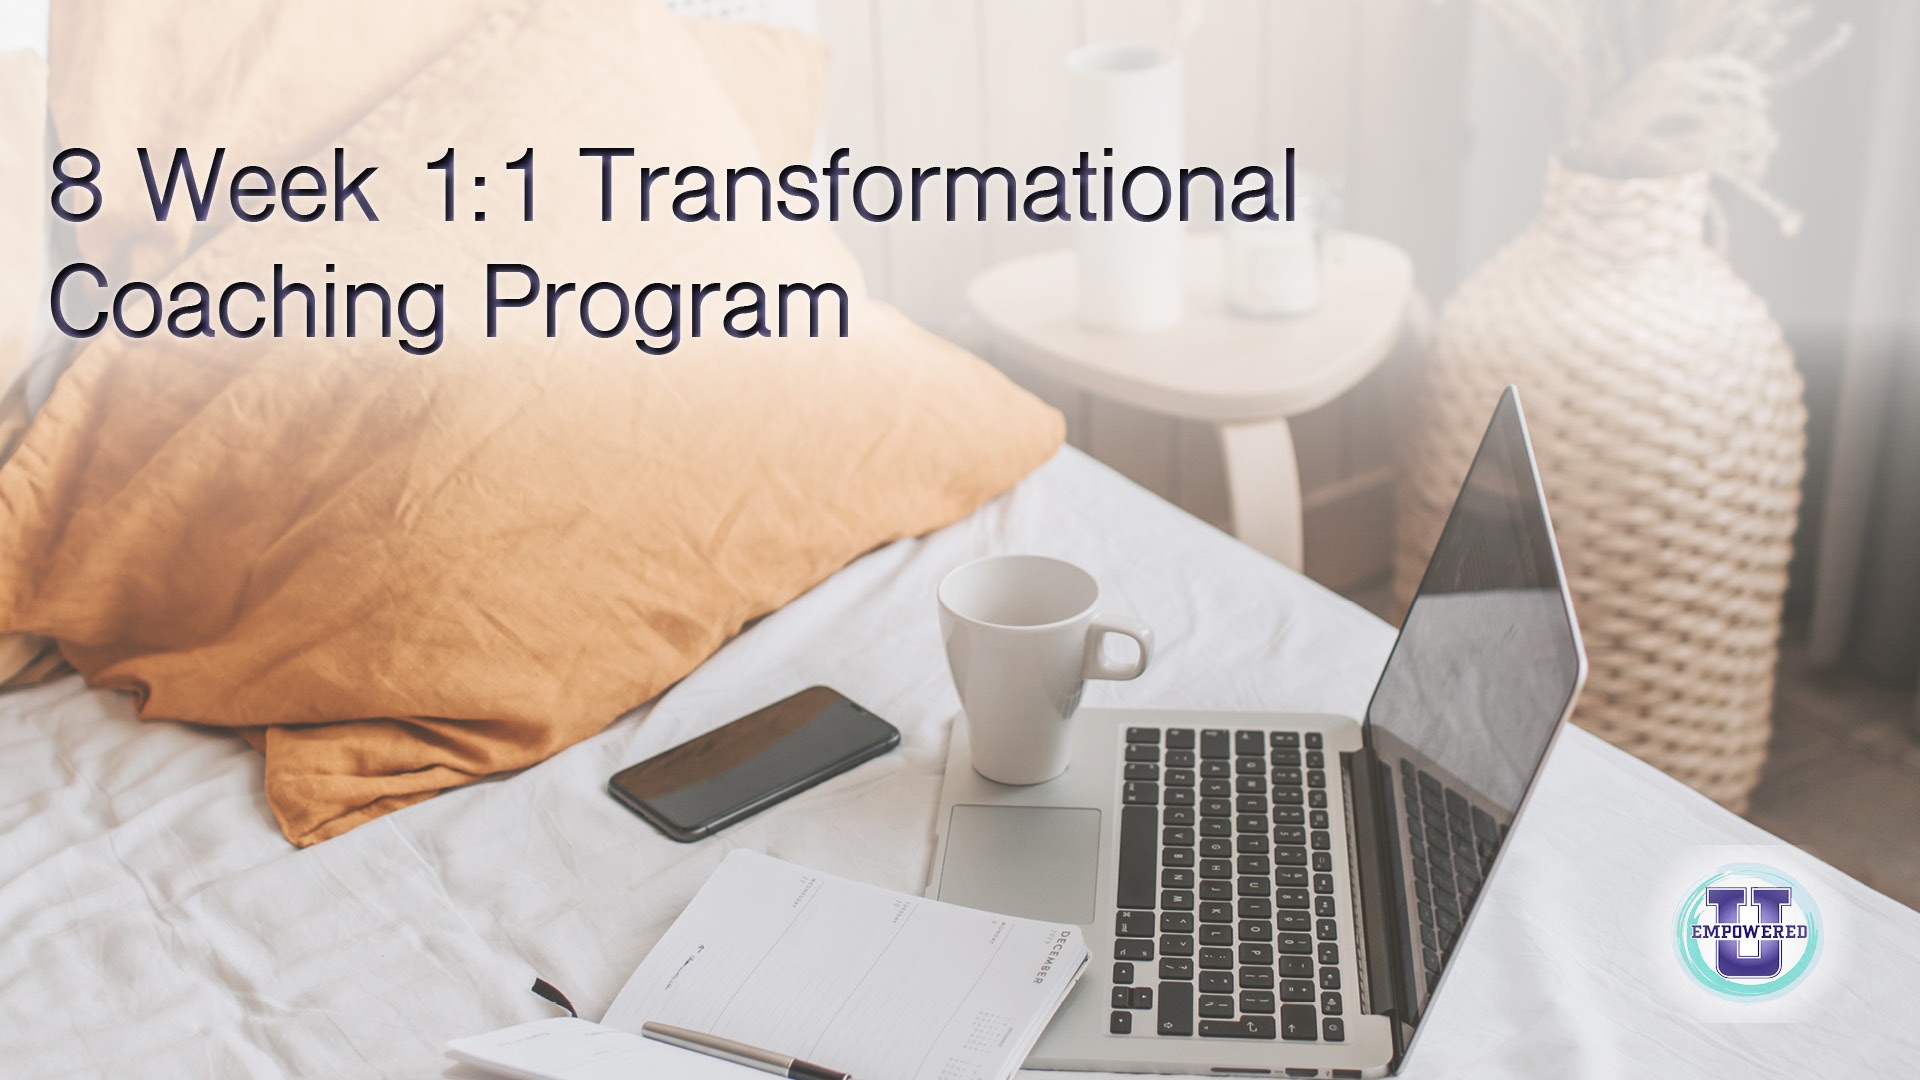 Transformational coaching program image of laptop, phone, notebook, and mug sitting on bed